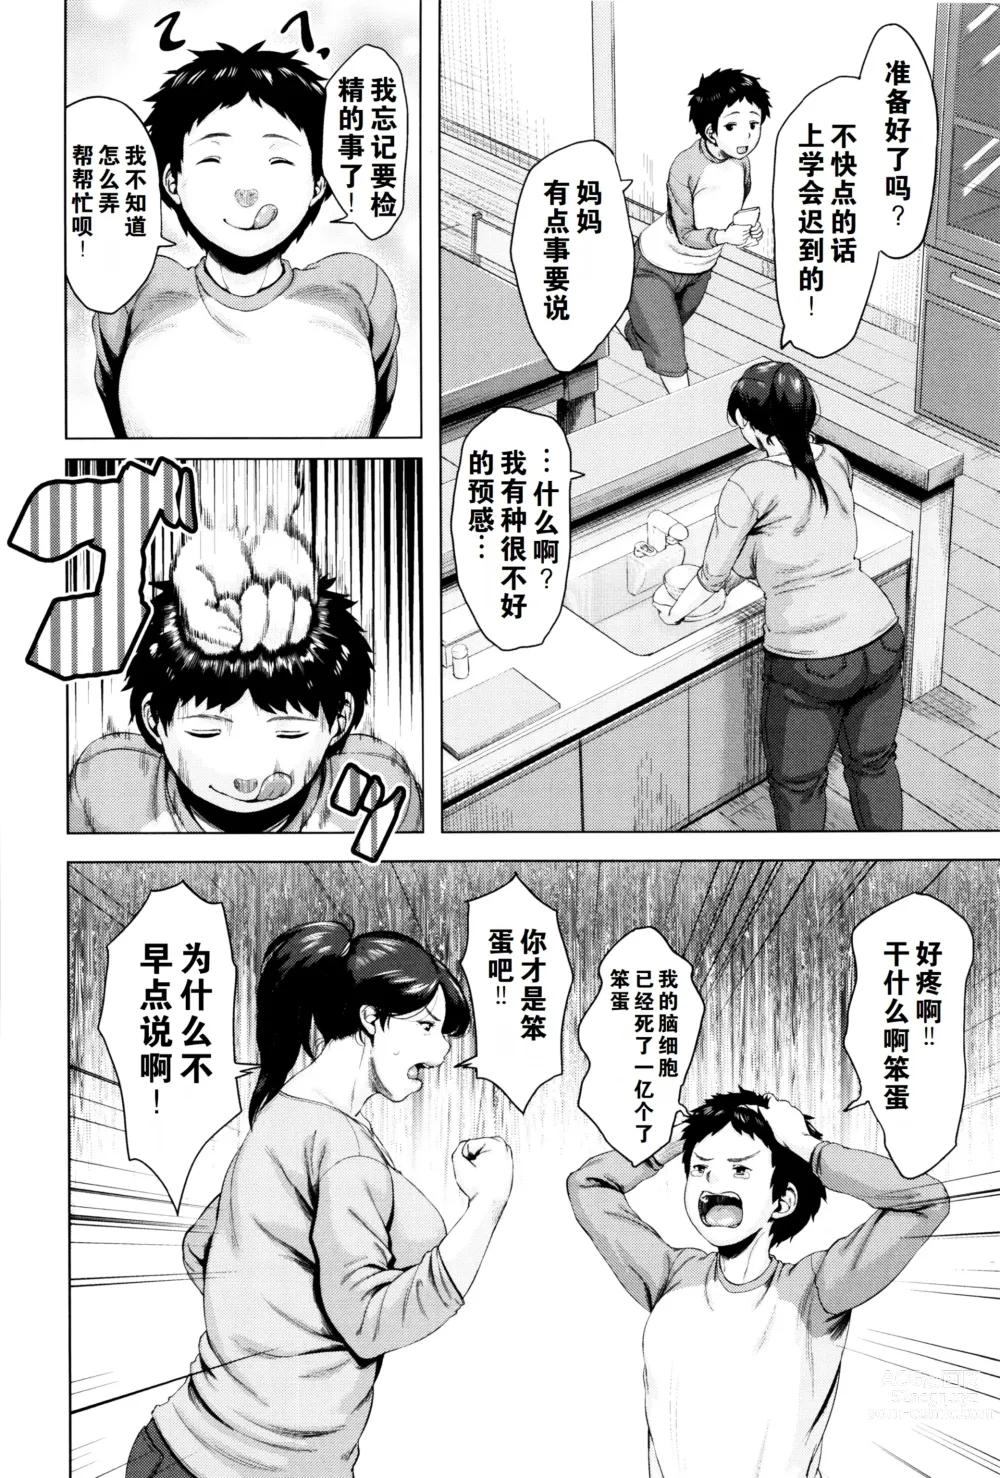 Page 9 of manga Kinyoubi no Haha-tachi e - To Fridays mothers